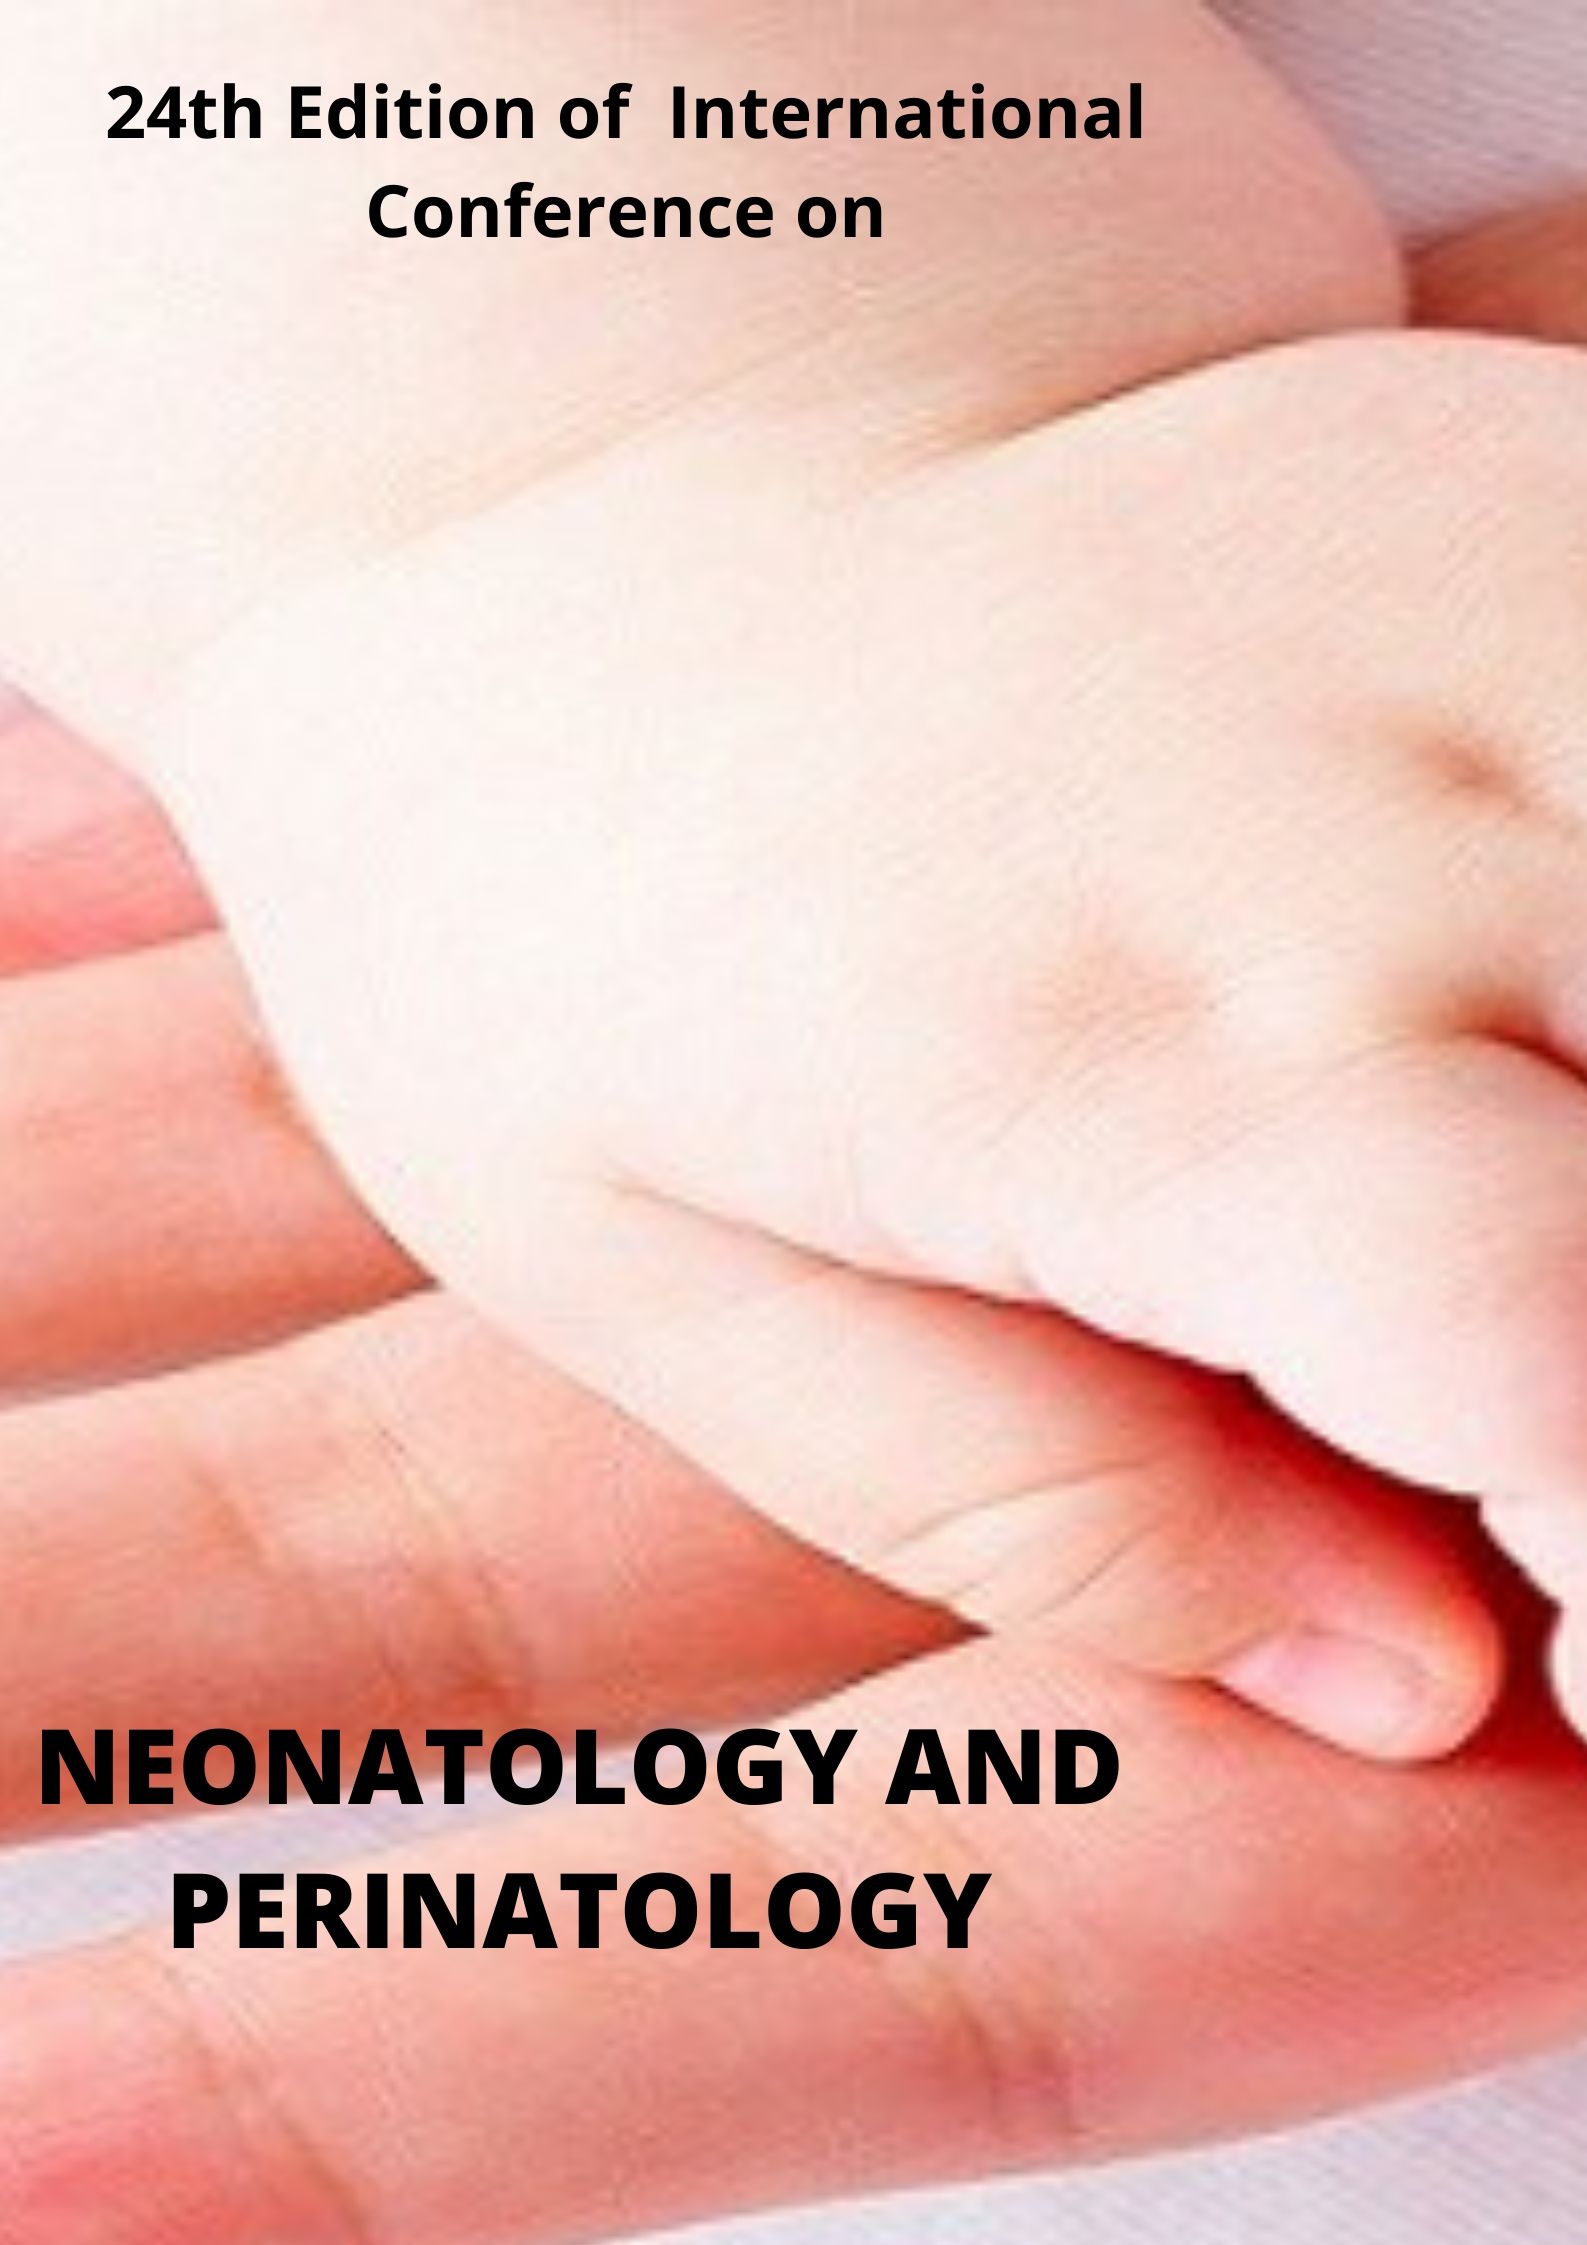 24th International Conference on Neonatology and Perinatology, Budapest, Hungary